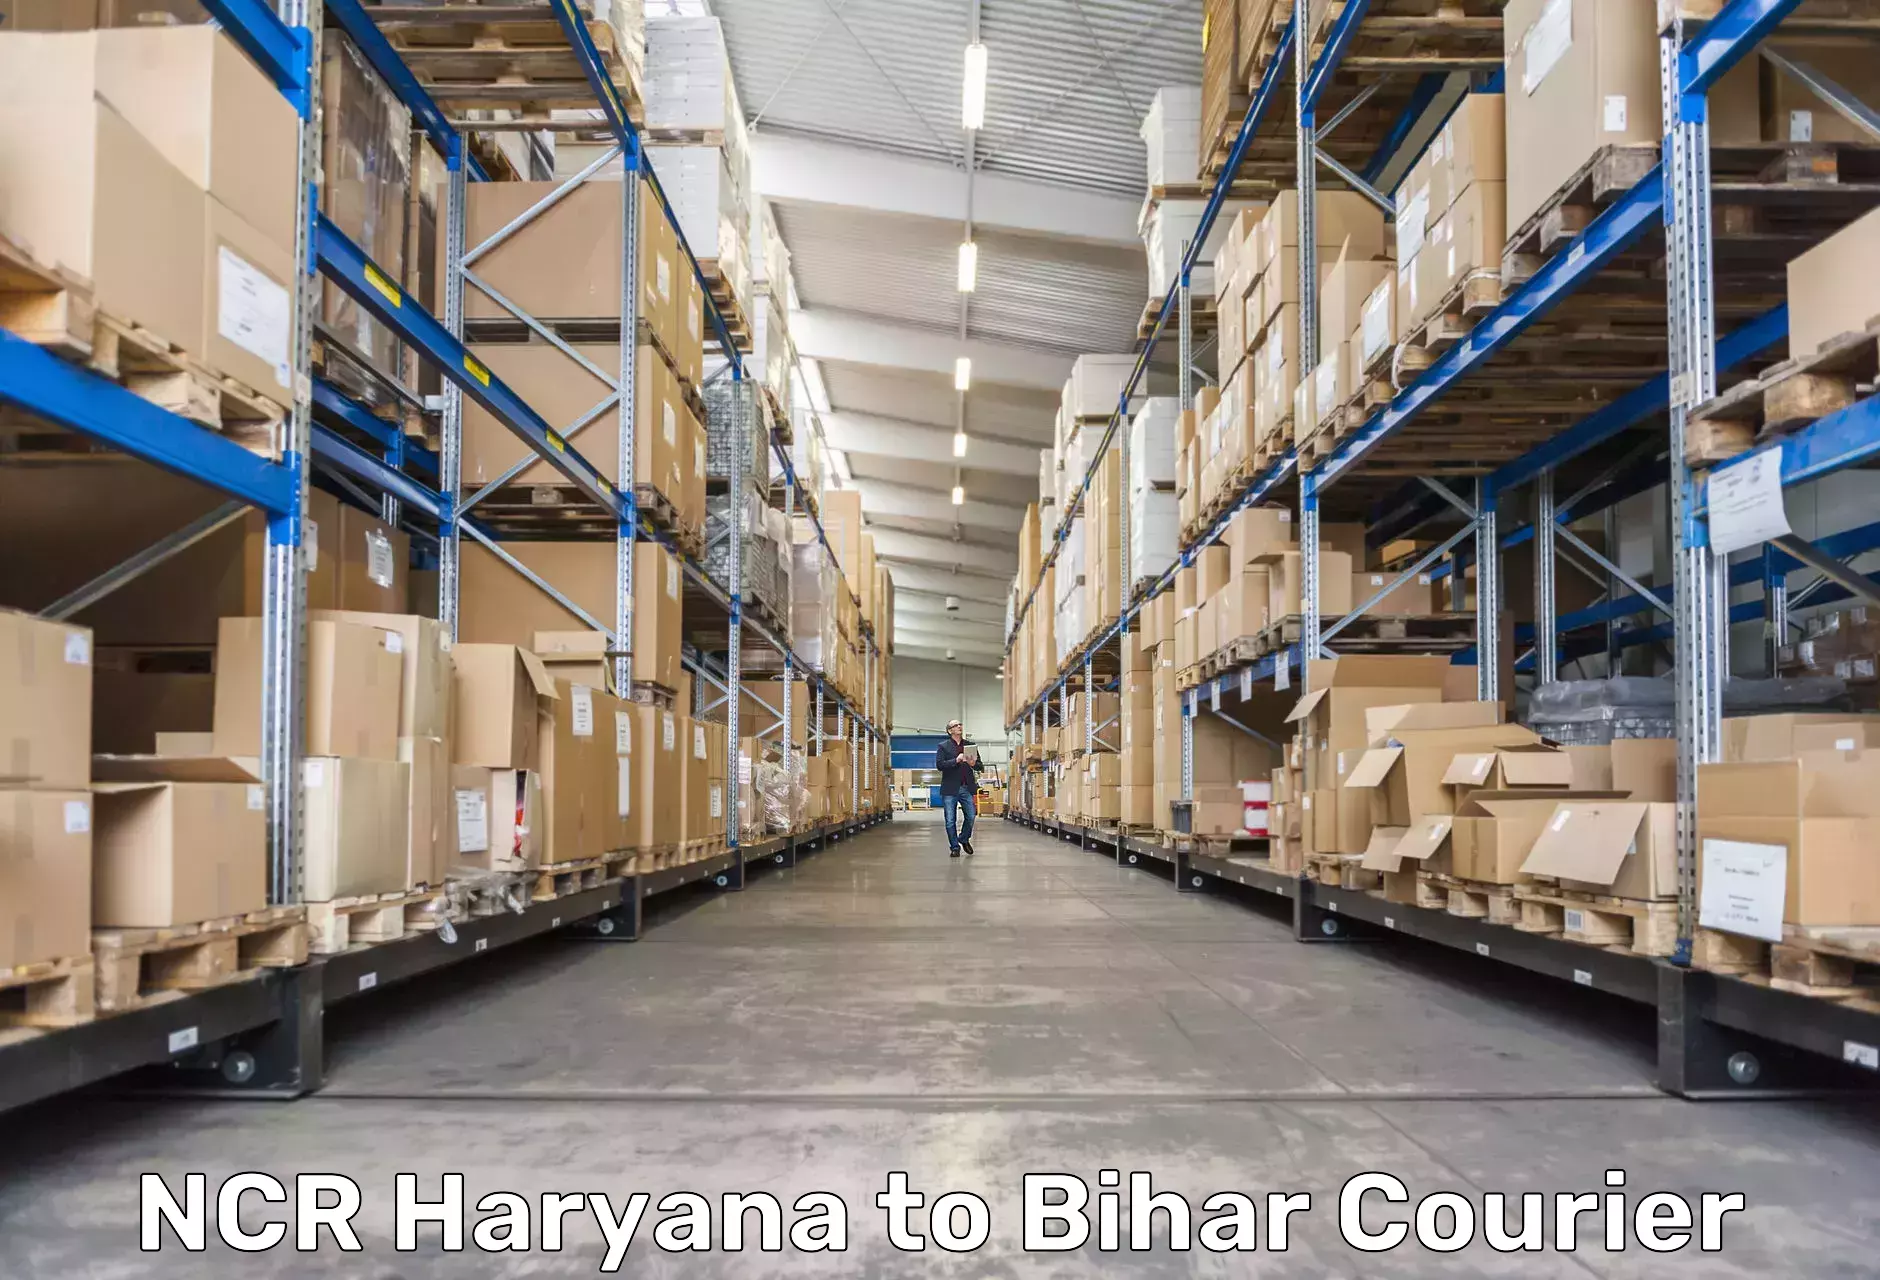 Global courier networks NCR Haryana to Tekari